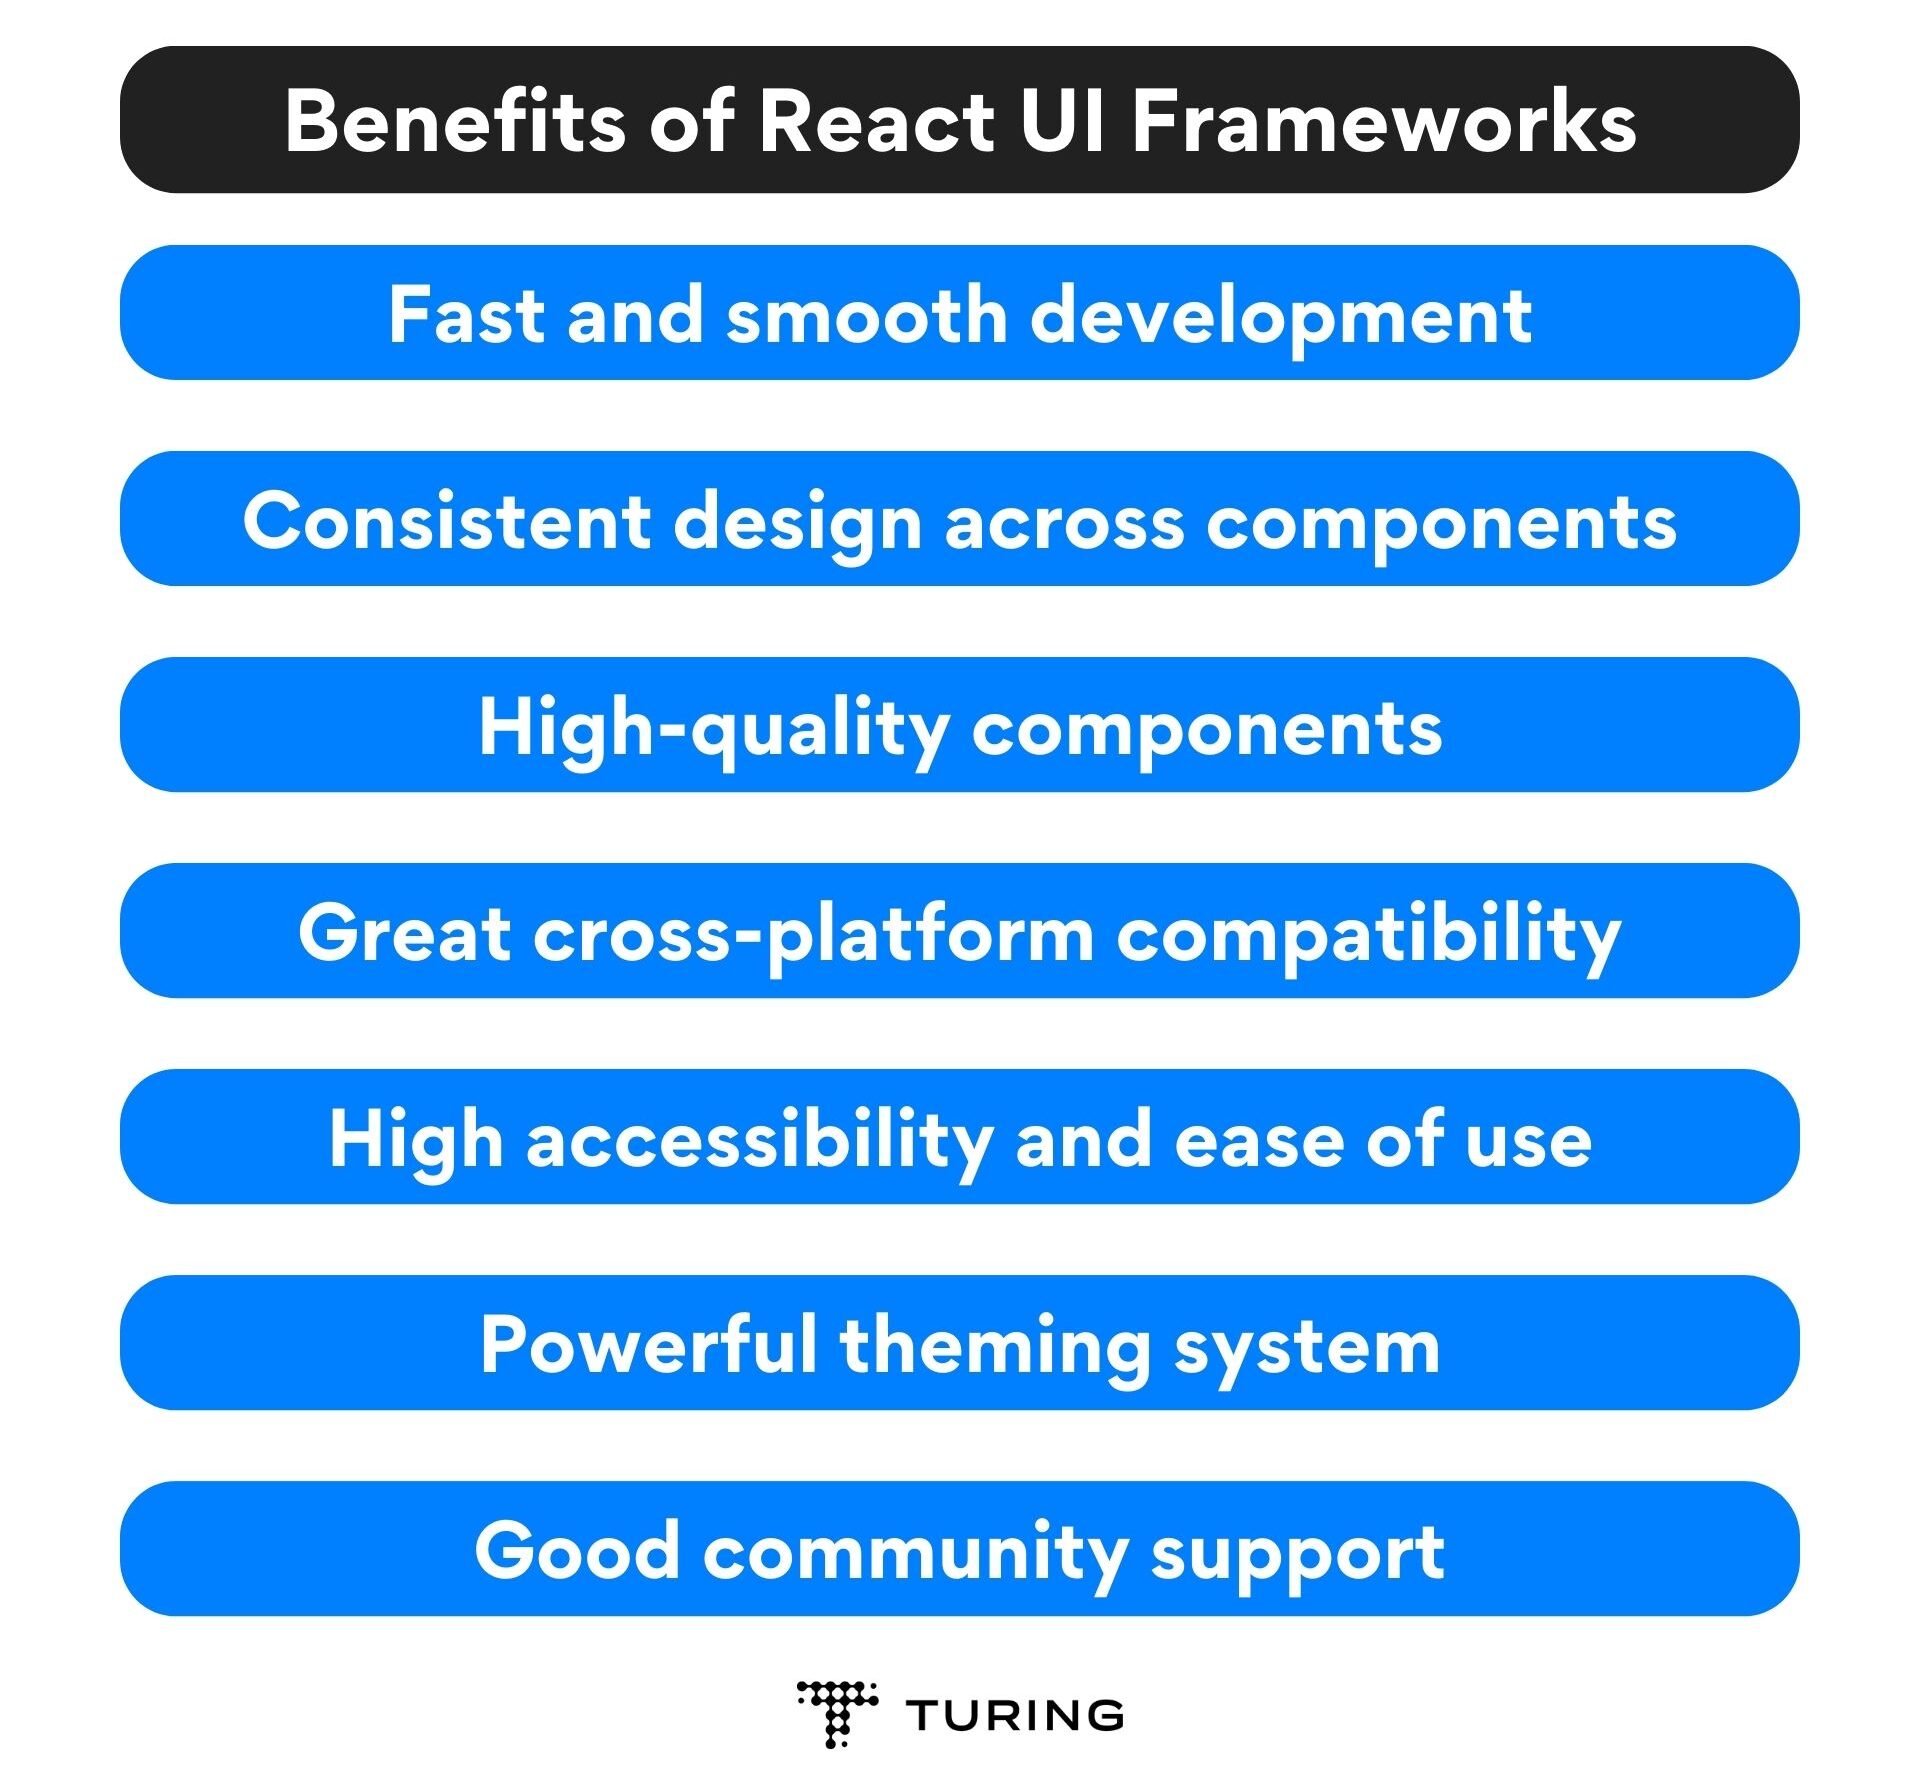 Benefits of React UI